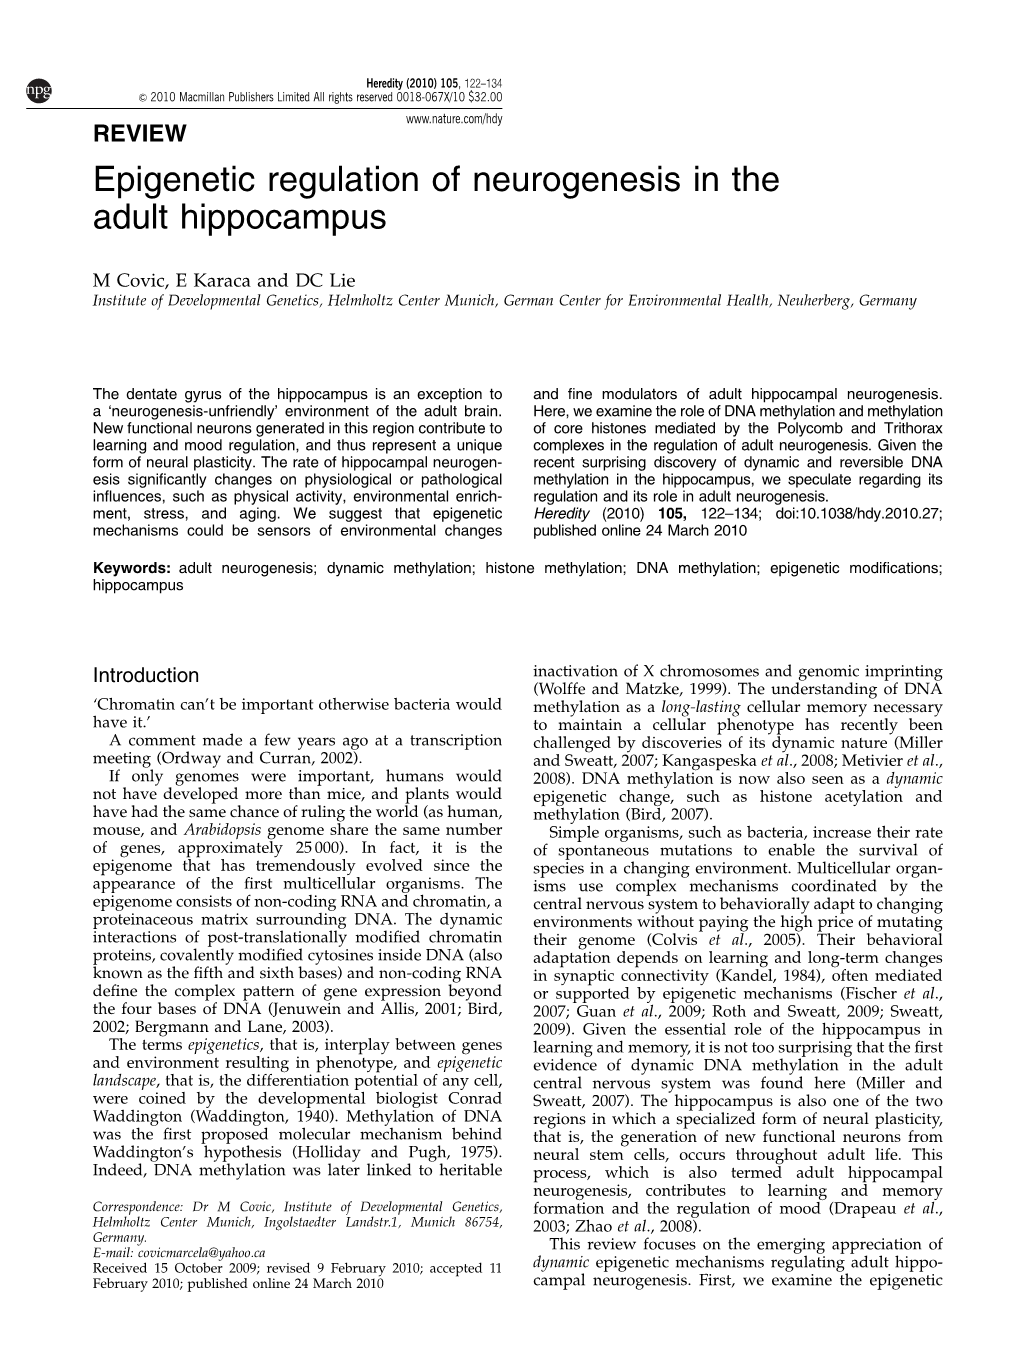 Epigenetic Regulation of Neurogenesis in the Adult Hippocampus